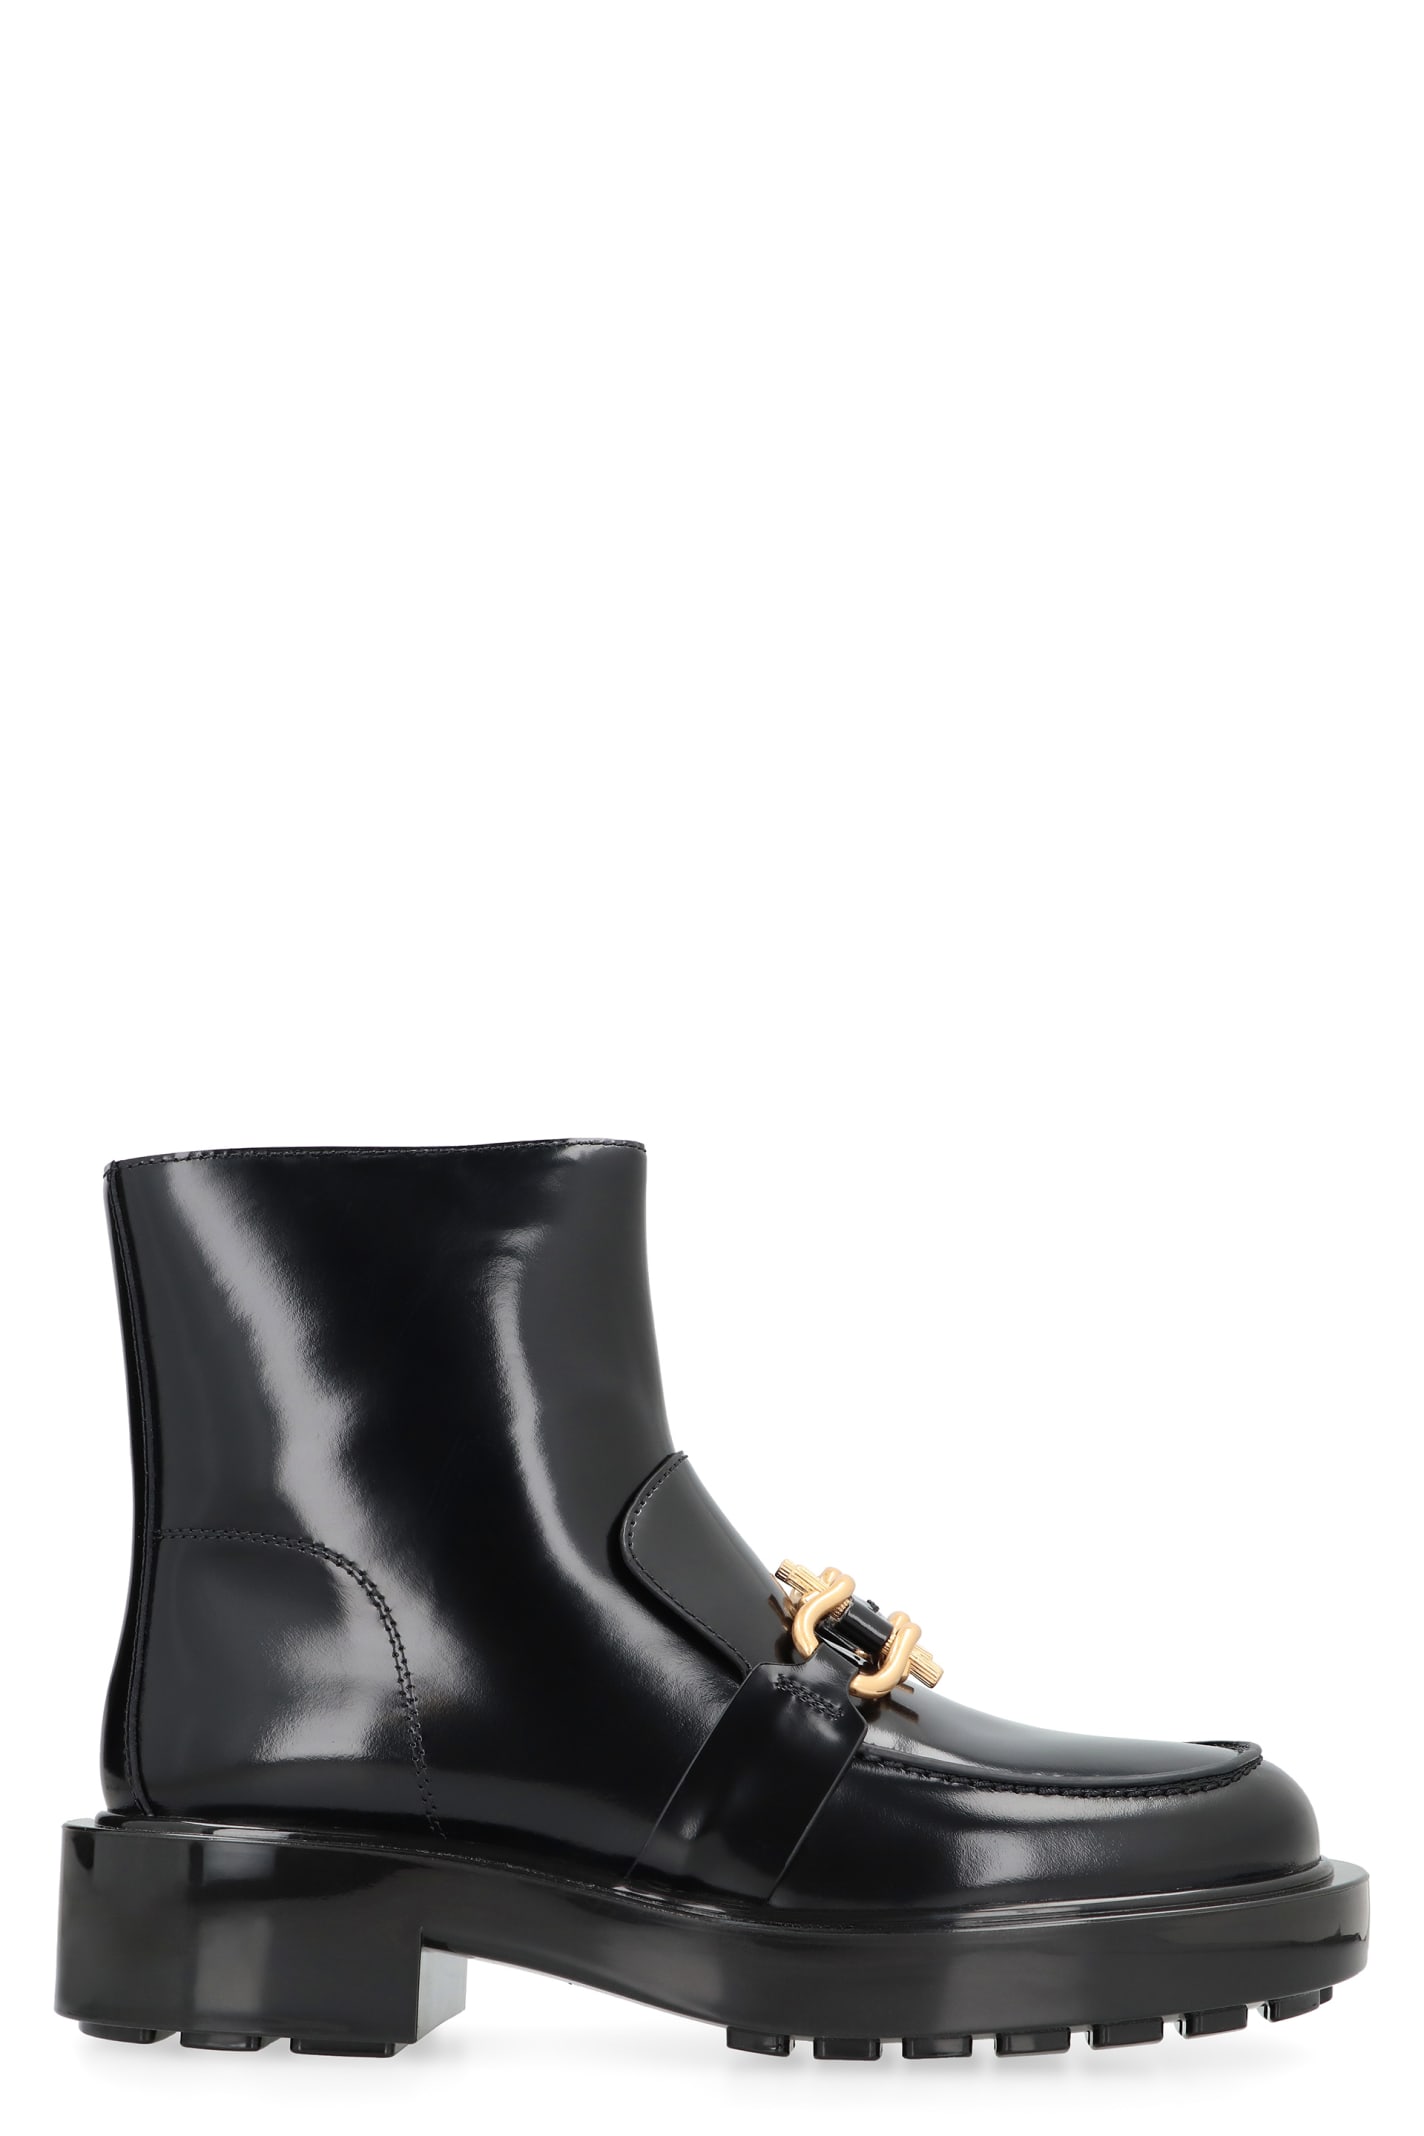 Bottega Veneta Monsieur Leather Ankle Boots